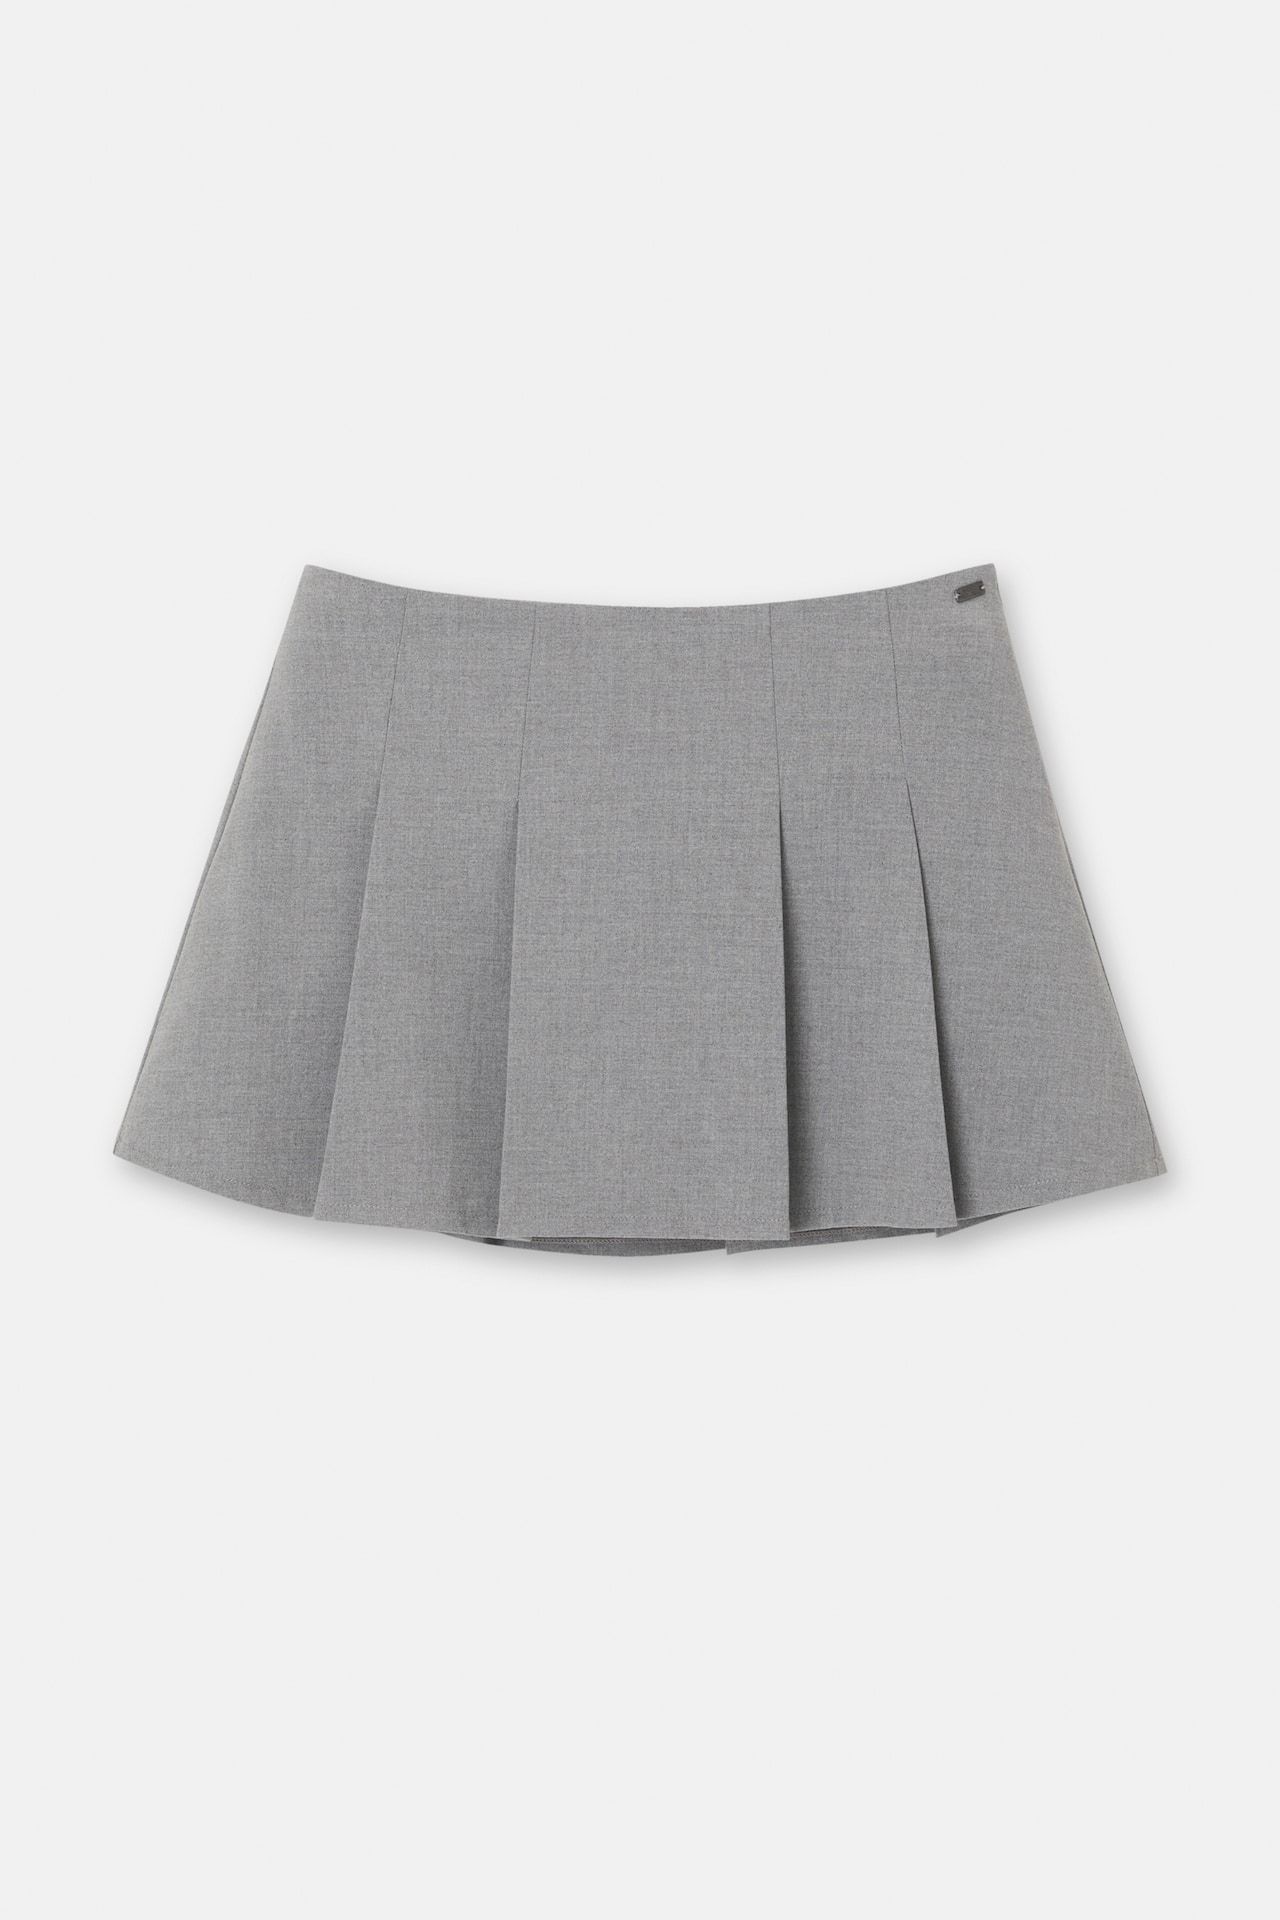 Mini skirt with box pleats | PULL and BEAR UK